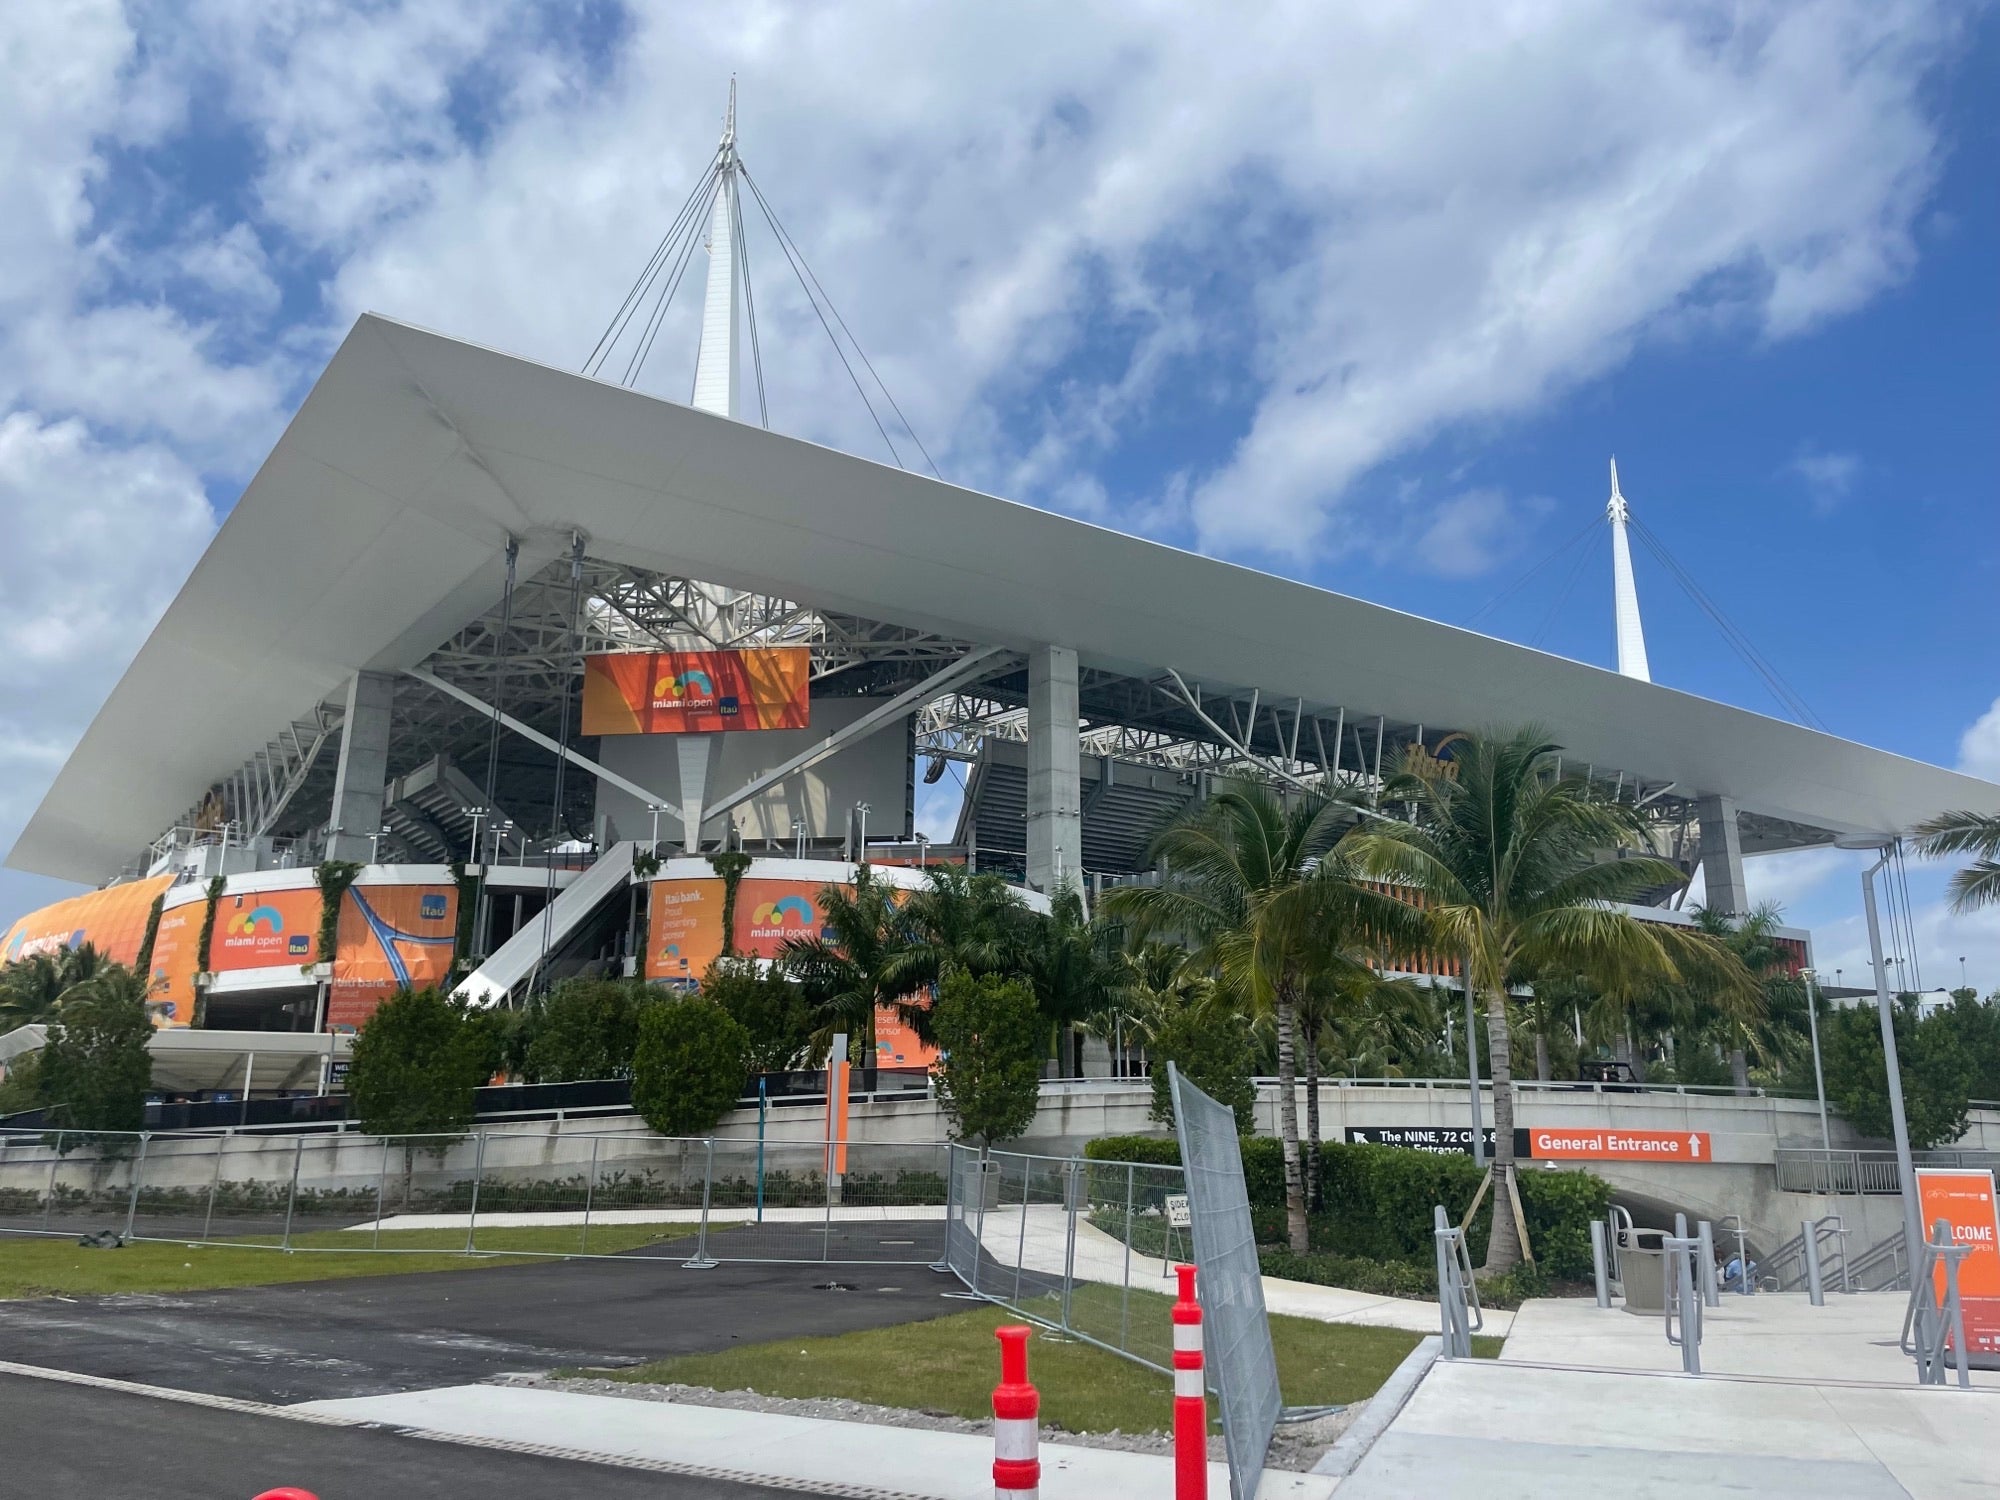 Mesmerizing action at the 2022 Miami Open